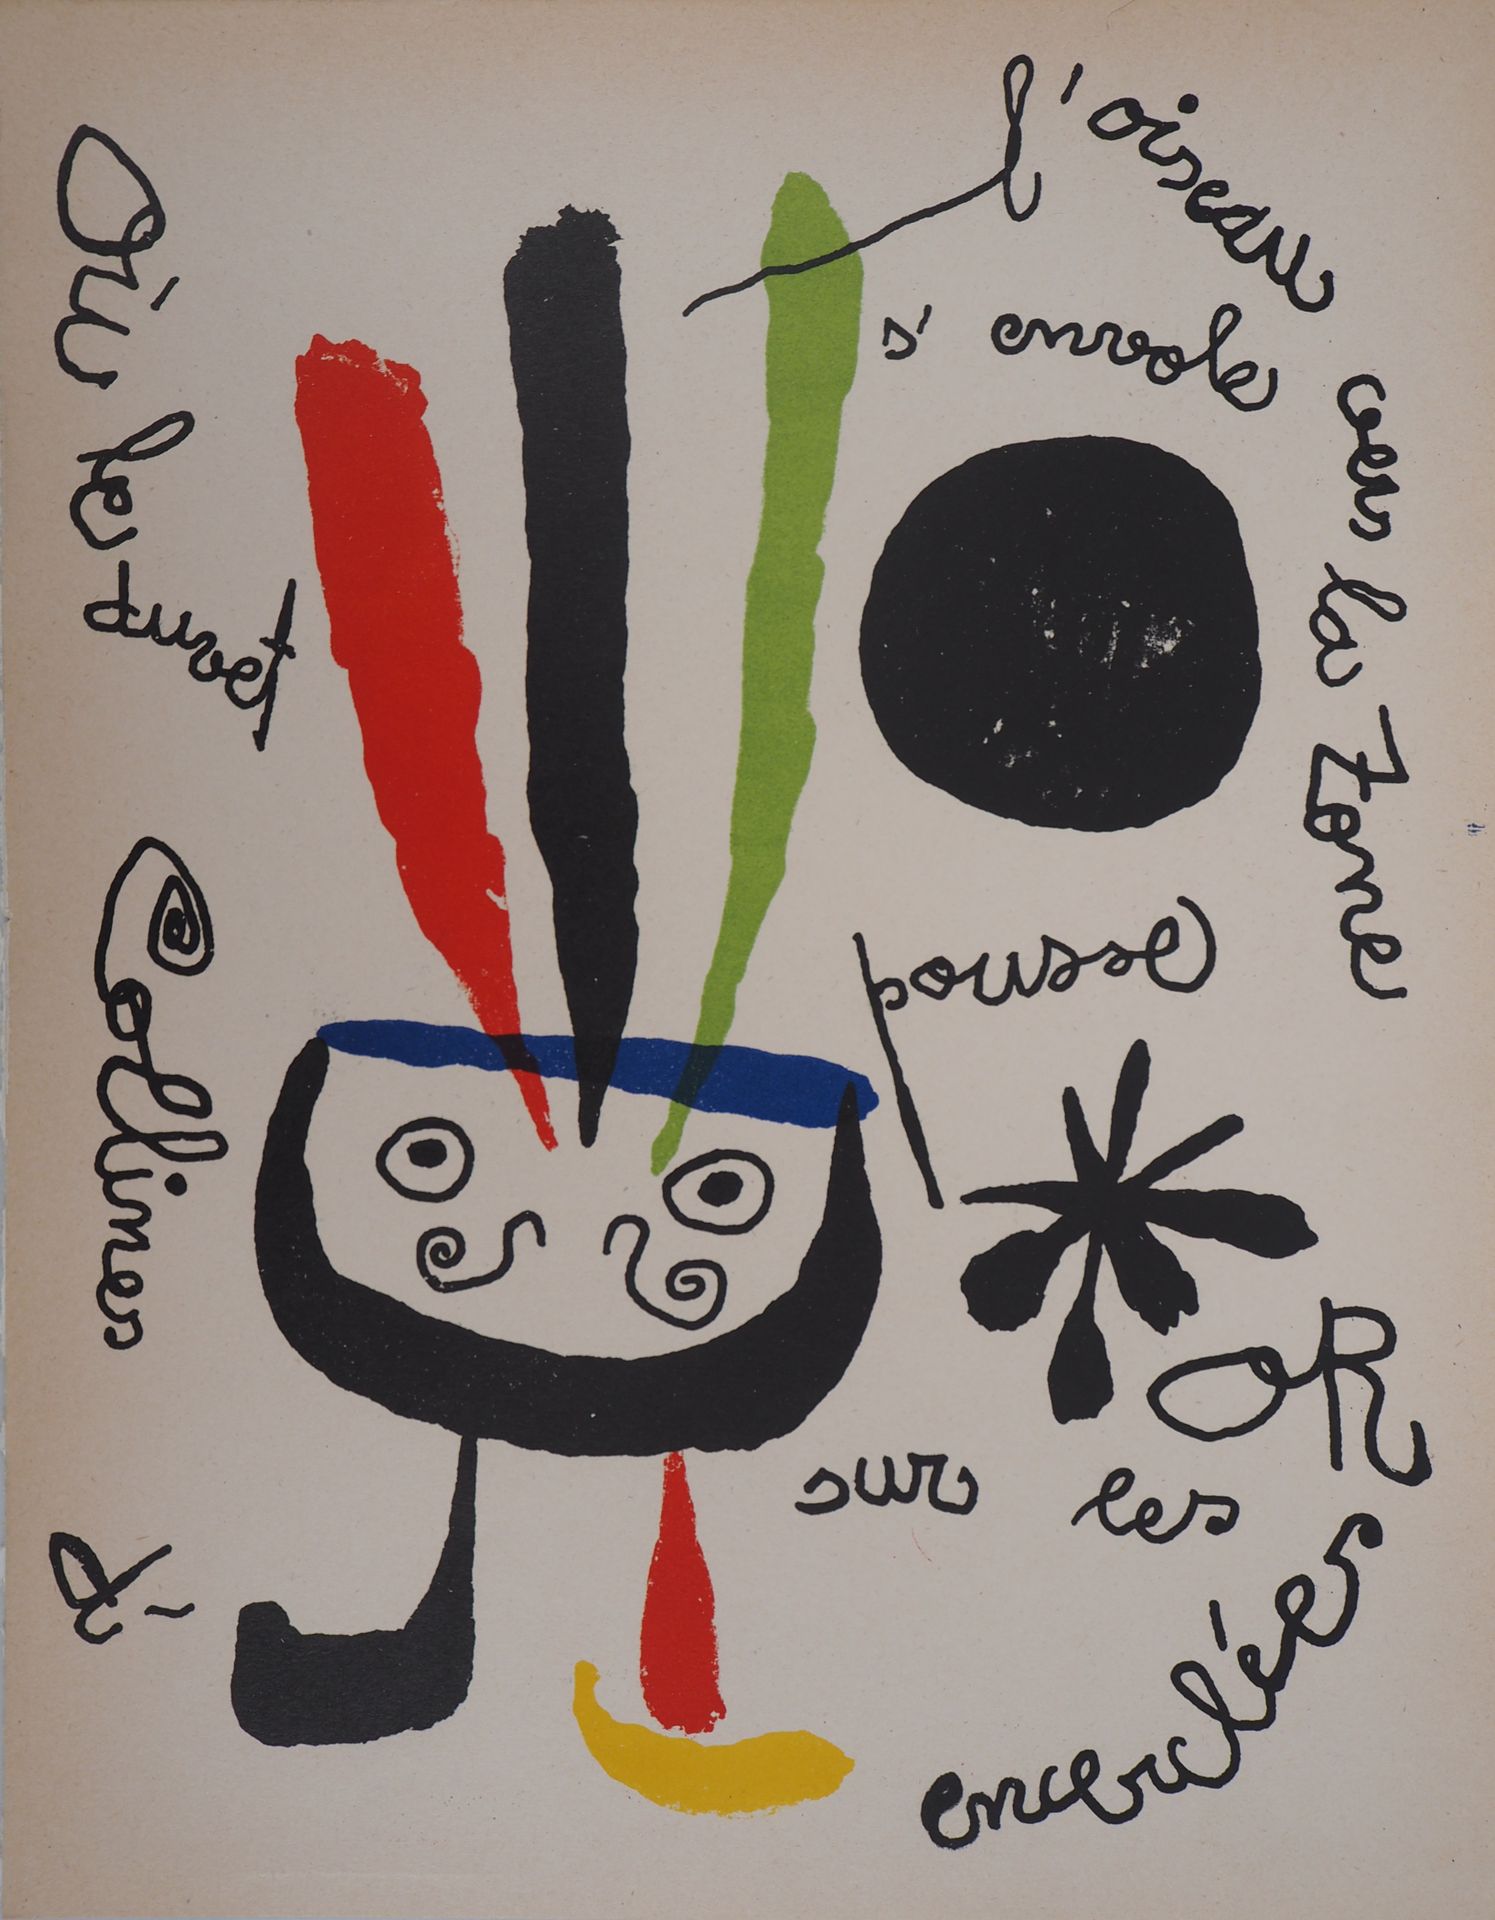 Joan Miro 琼-米罗

鸟儿

原始石版画（Mourlot工作室）。

厚纸上 31 x 24 cm

限量发行1500册

圣拉扎罗版, 1952

&hellip;